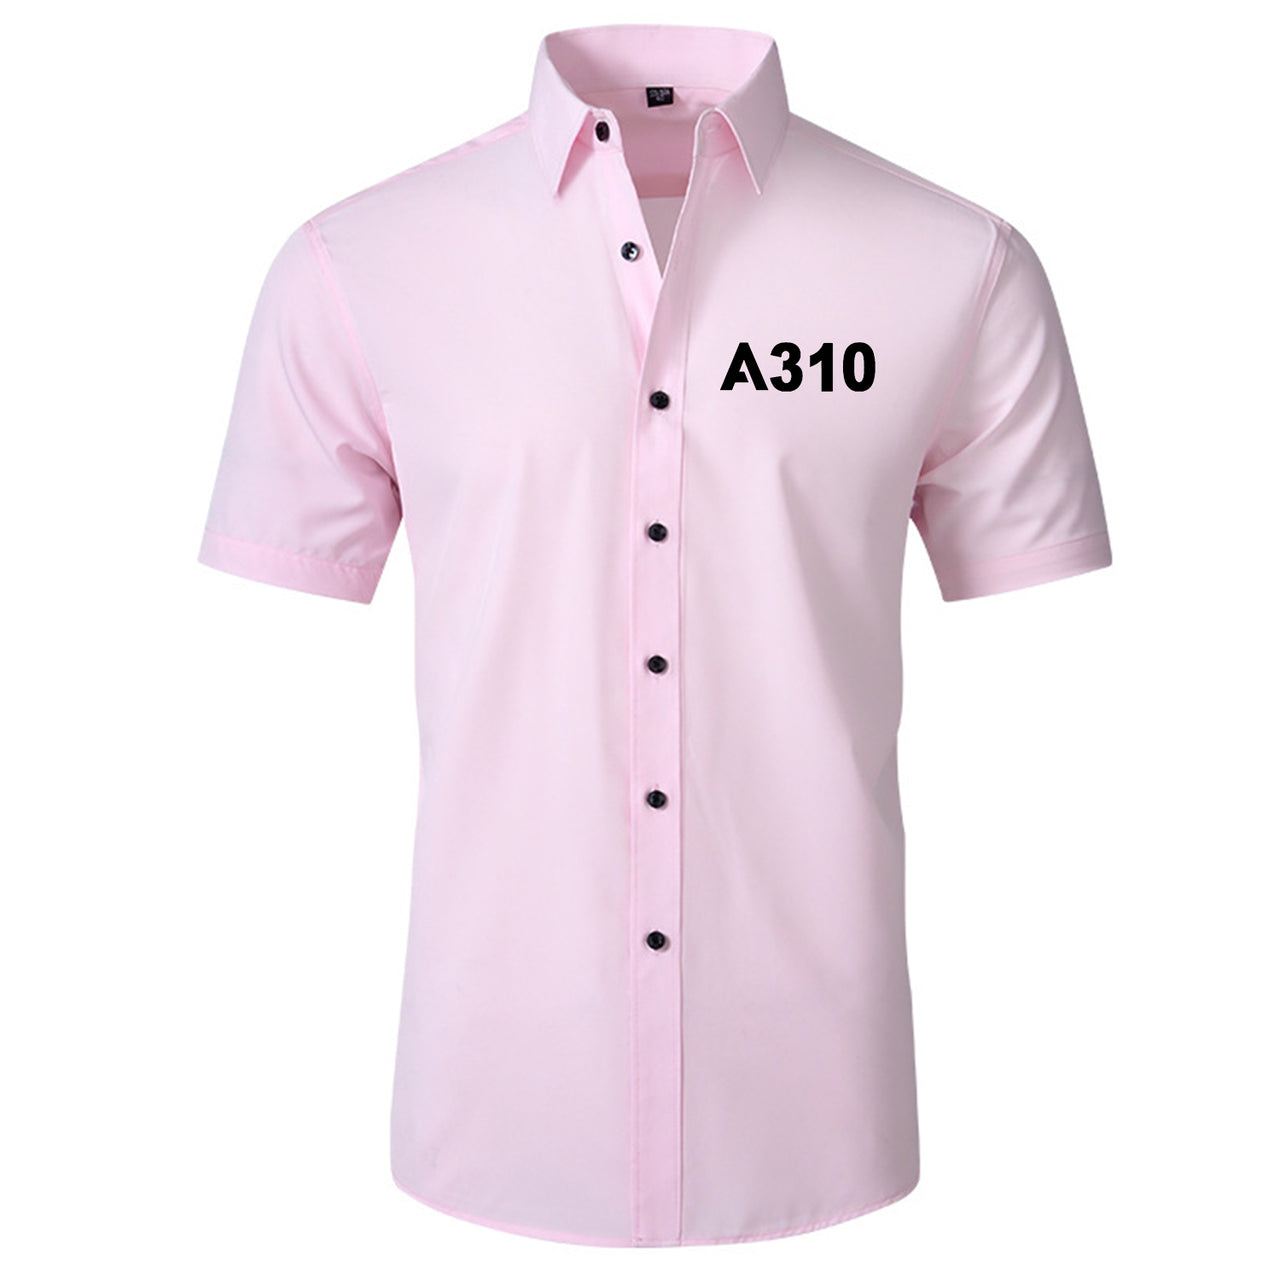 A310 Flat Text Designed Short Sleeve Shirts